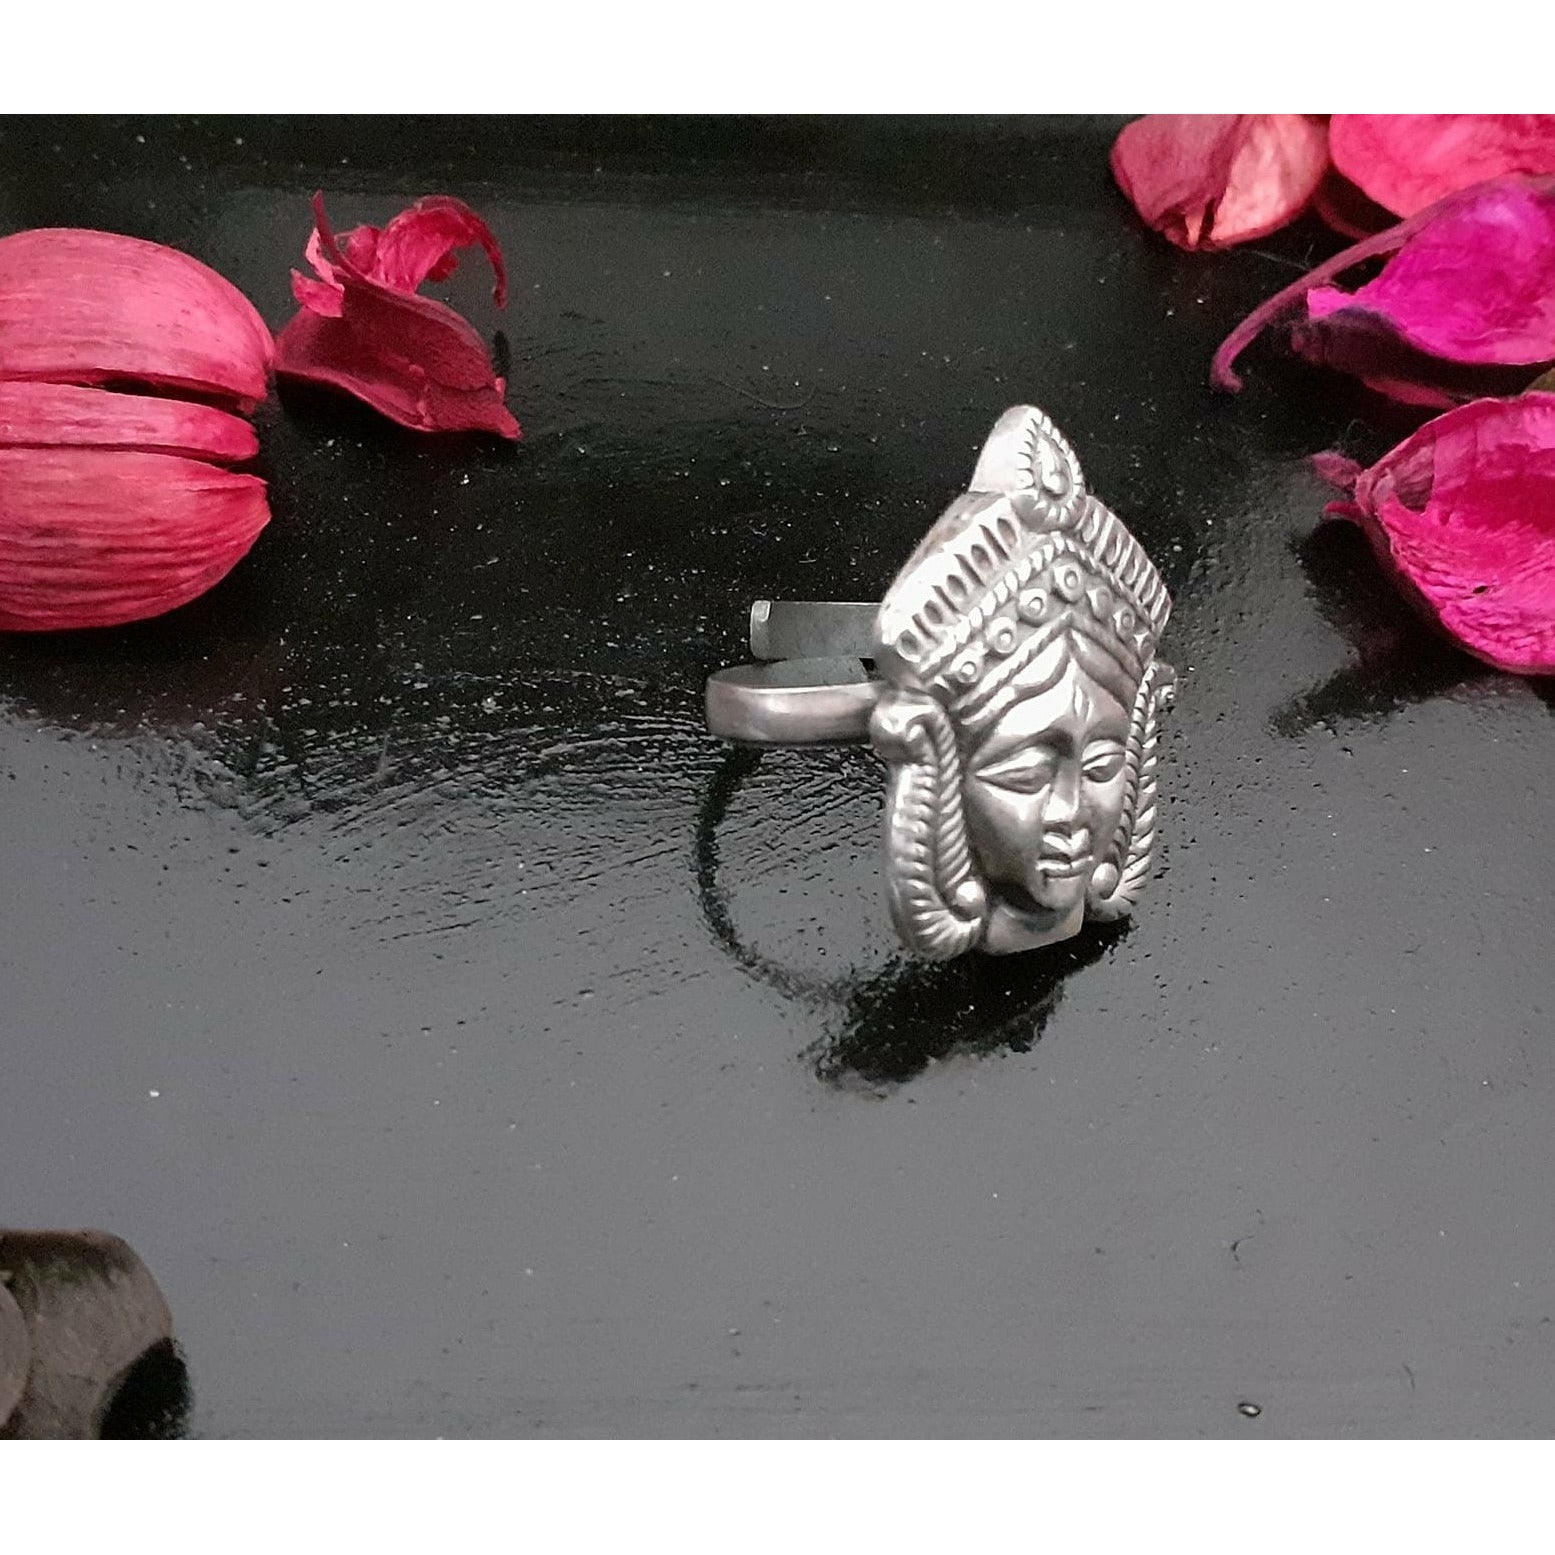 Lord Shiva Trident Kada Bracelet 925 Sterling Silver - Etsy | Rudraksha  bracelet, Gold accessories, Lord shiva